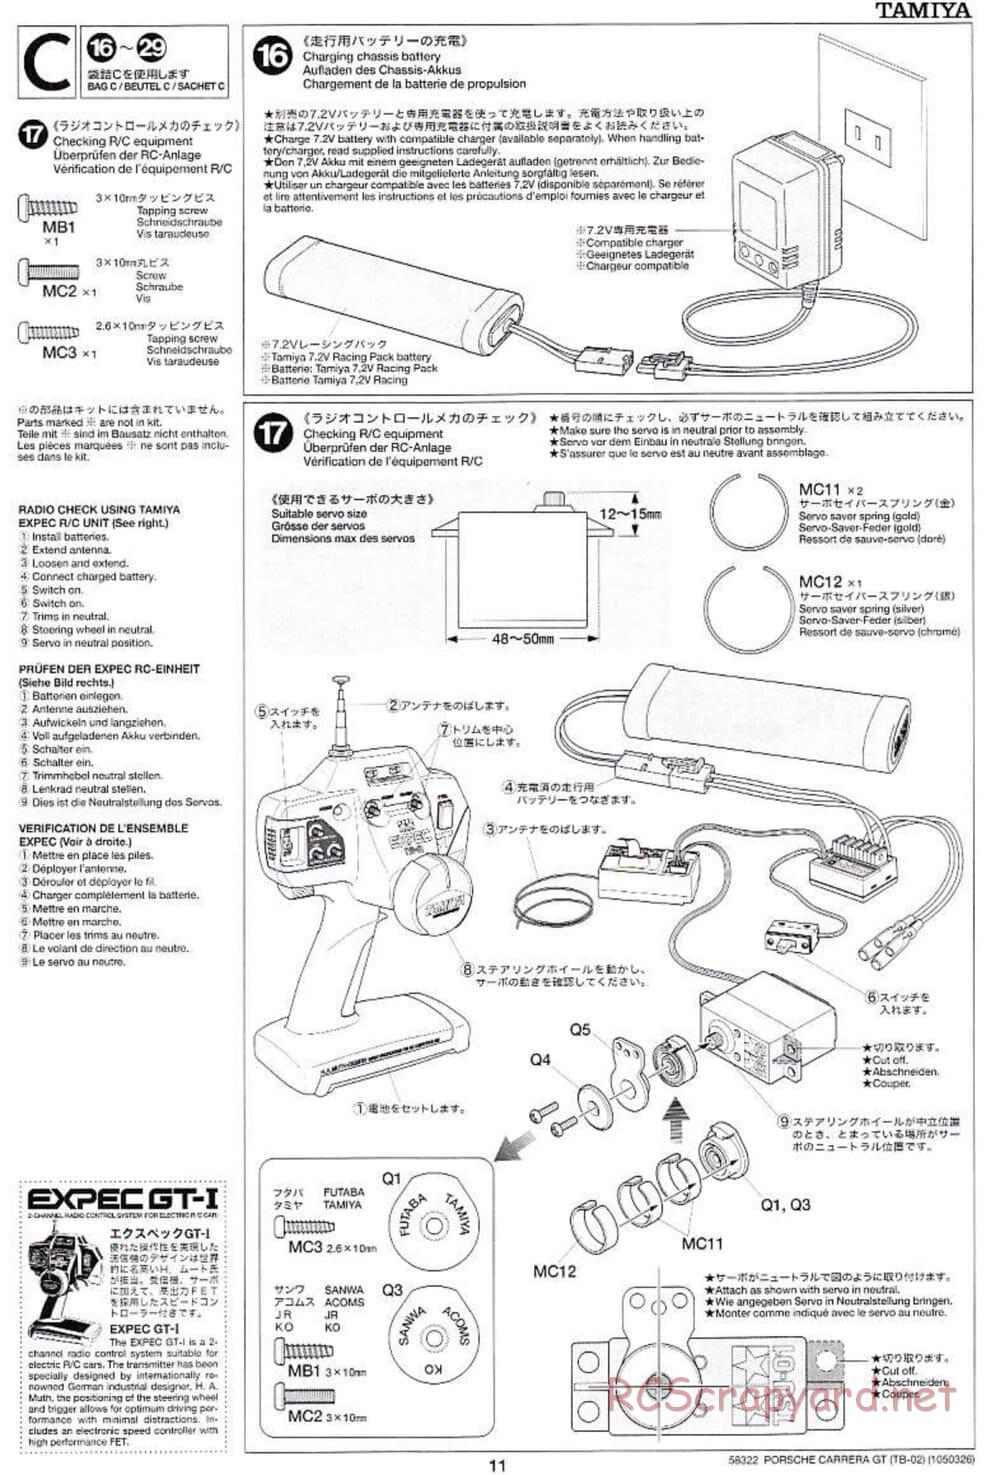 Tamiya - Porsche Carrera GT - TB-02 Chassis - Manual - Page 11